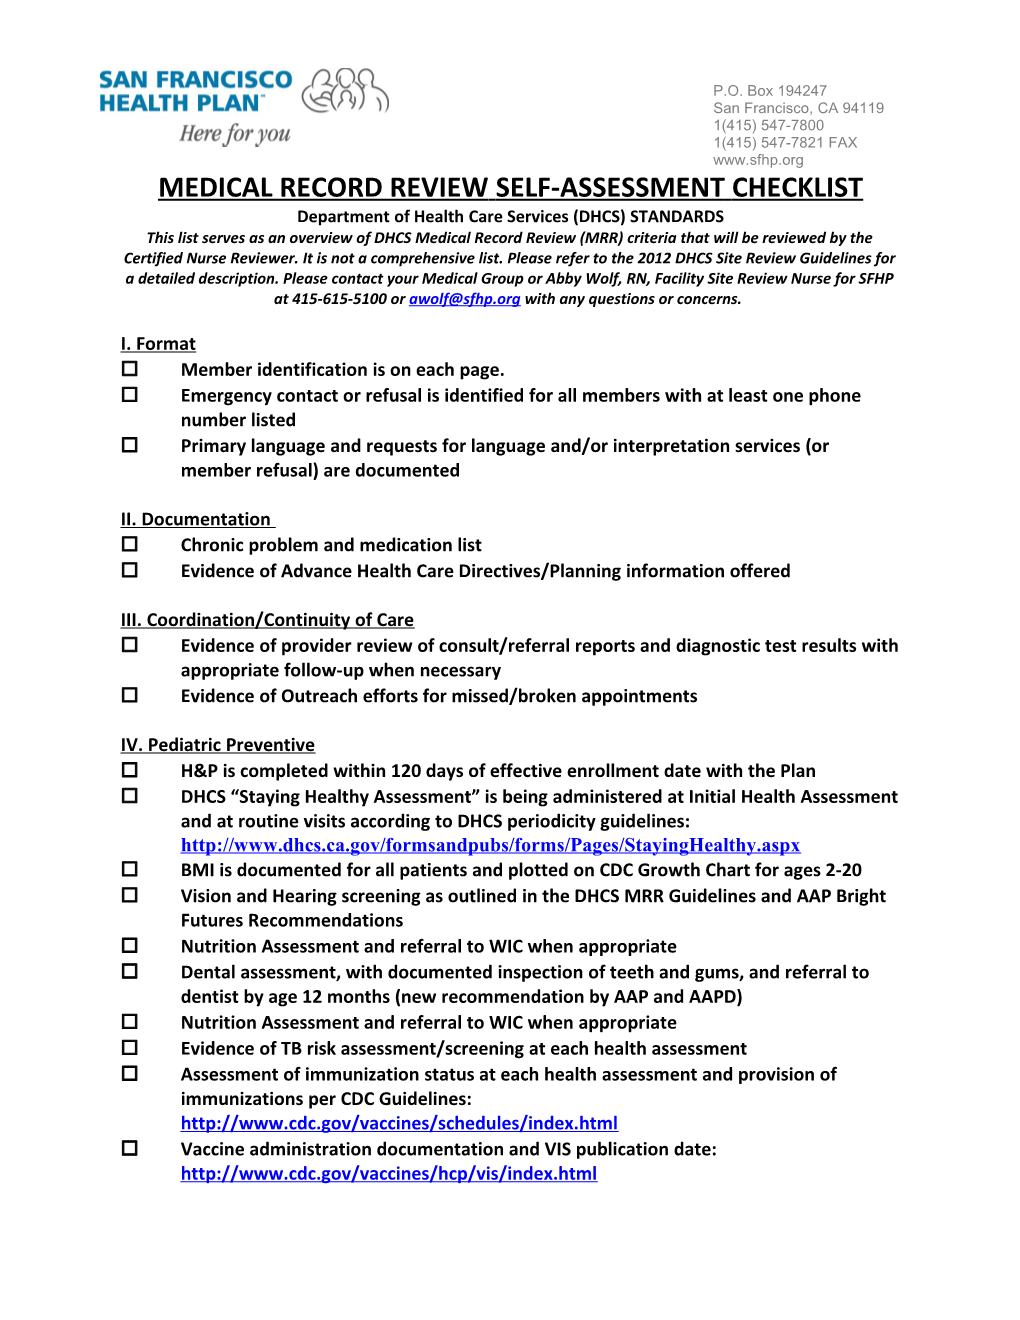 Medical Record Reviewself-Assessmentchecklist